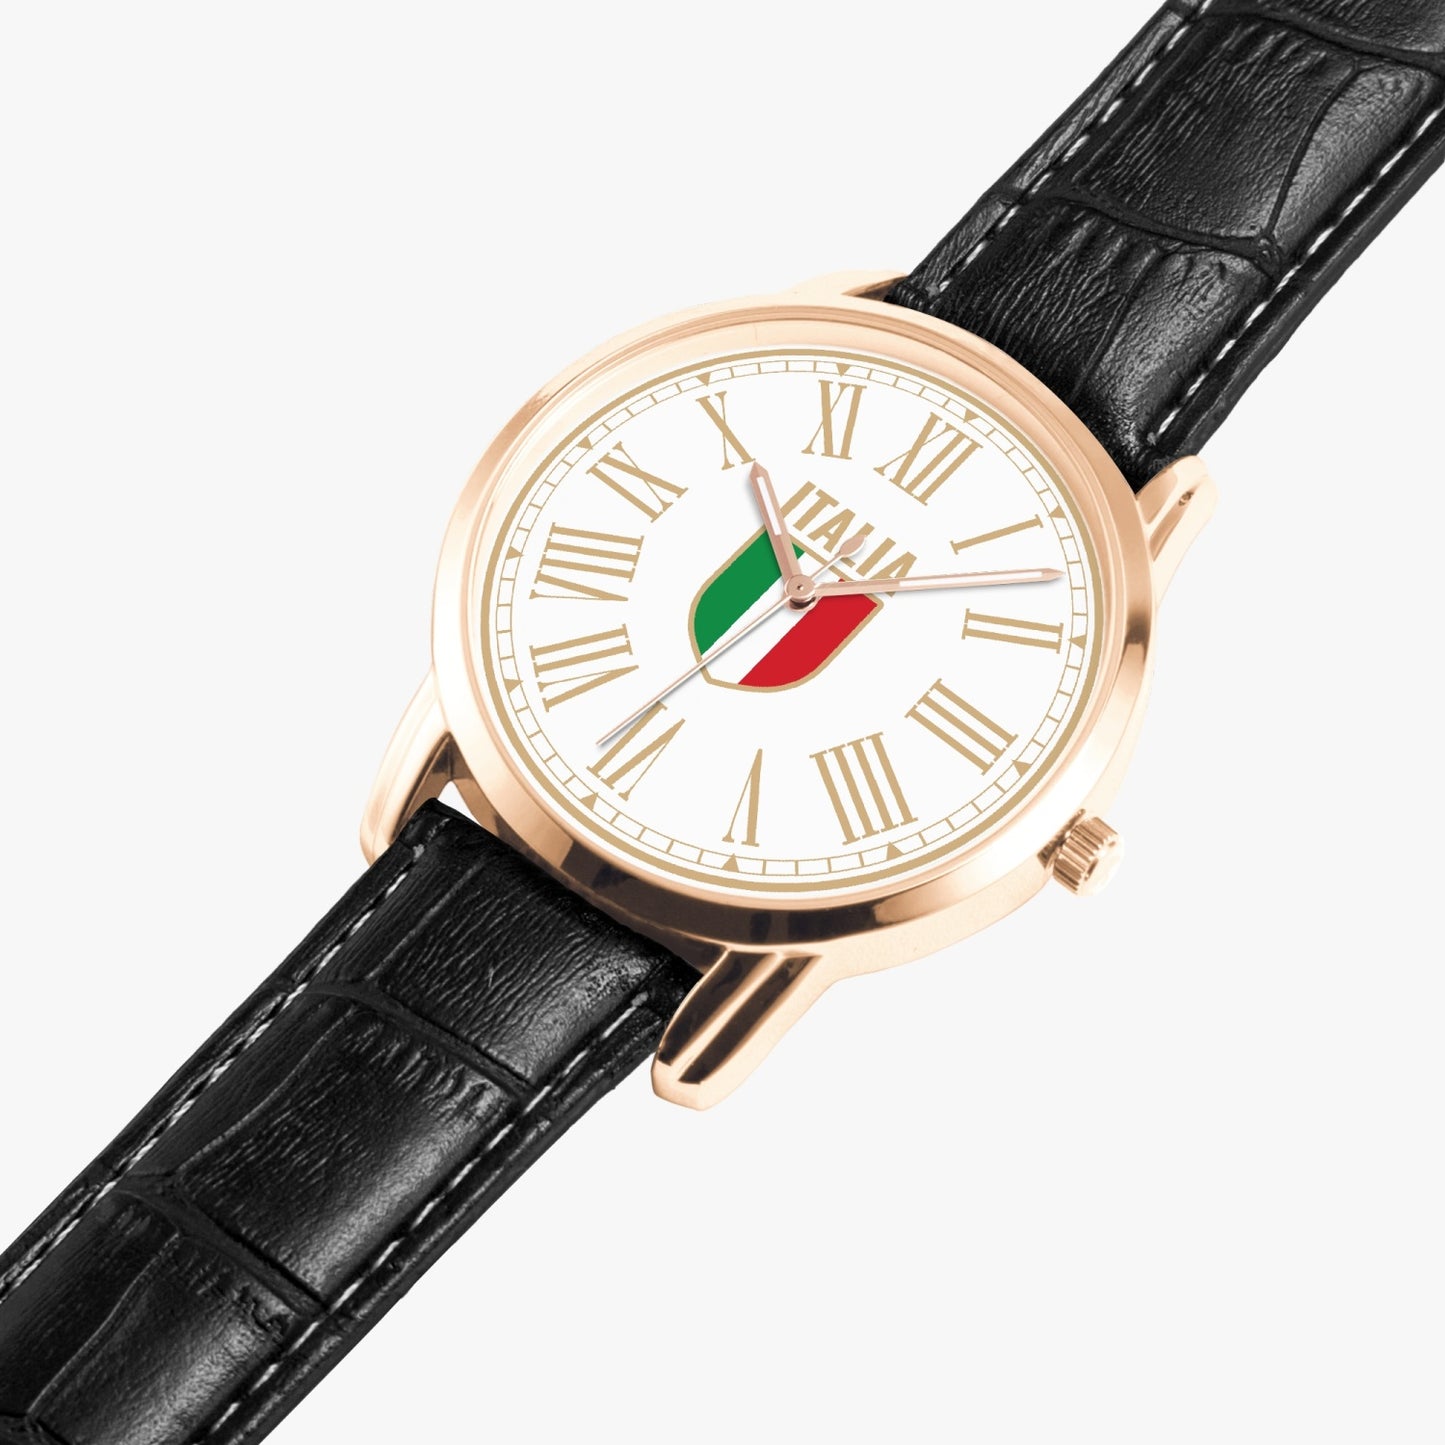 Quartz watch - Italy gold white